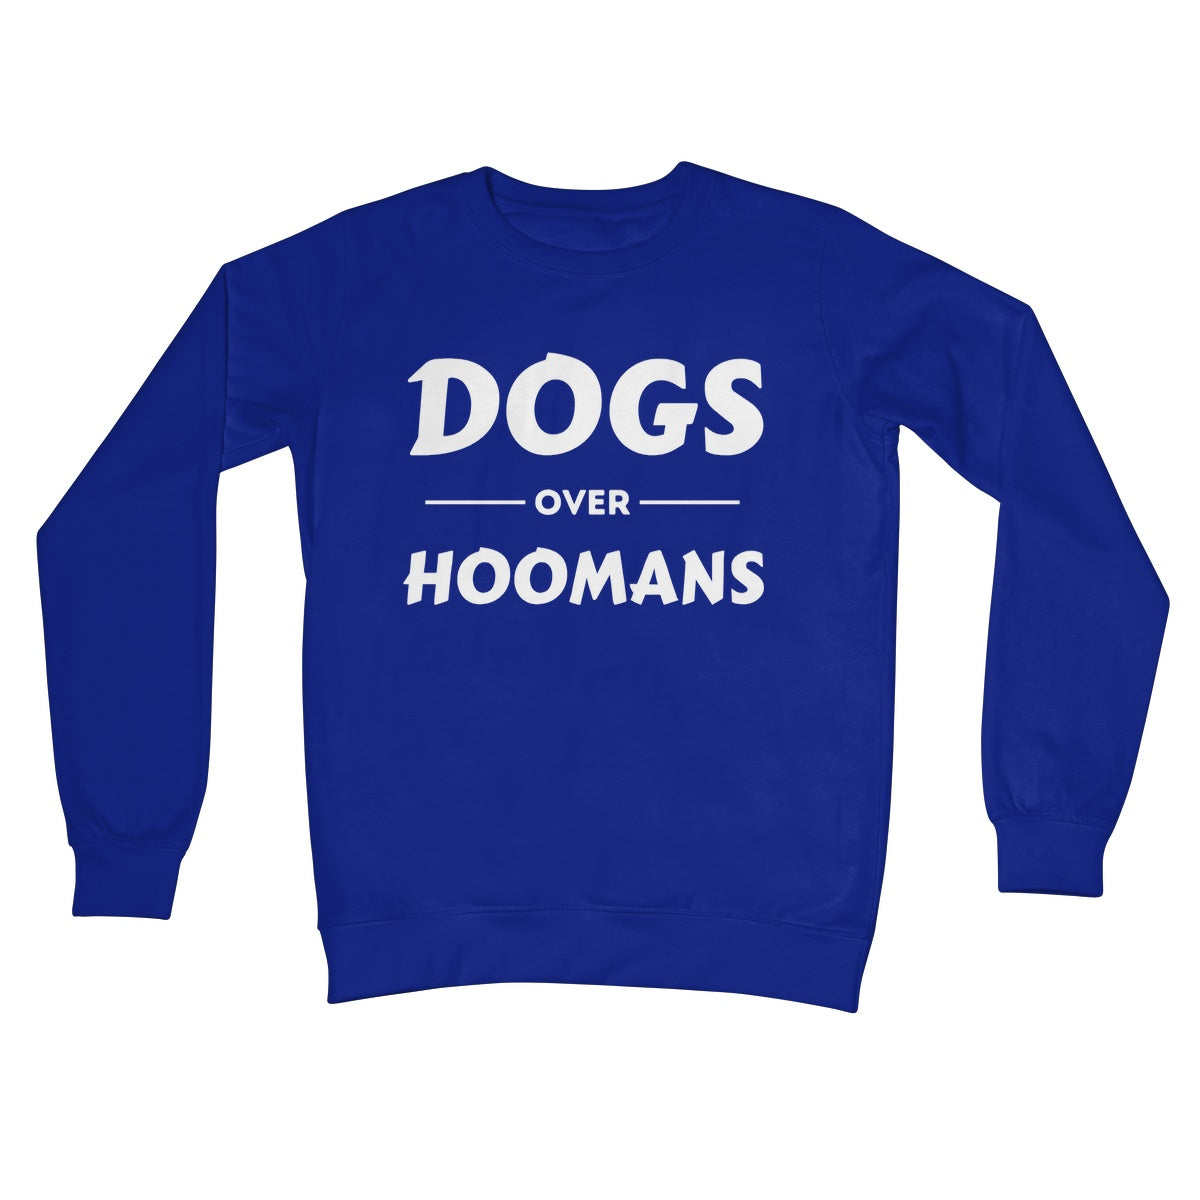 dogs over hoomans jumper blue